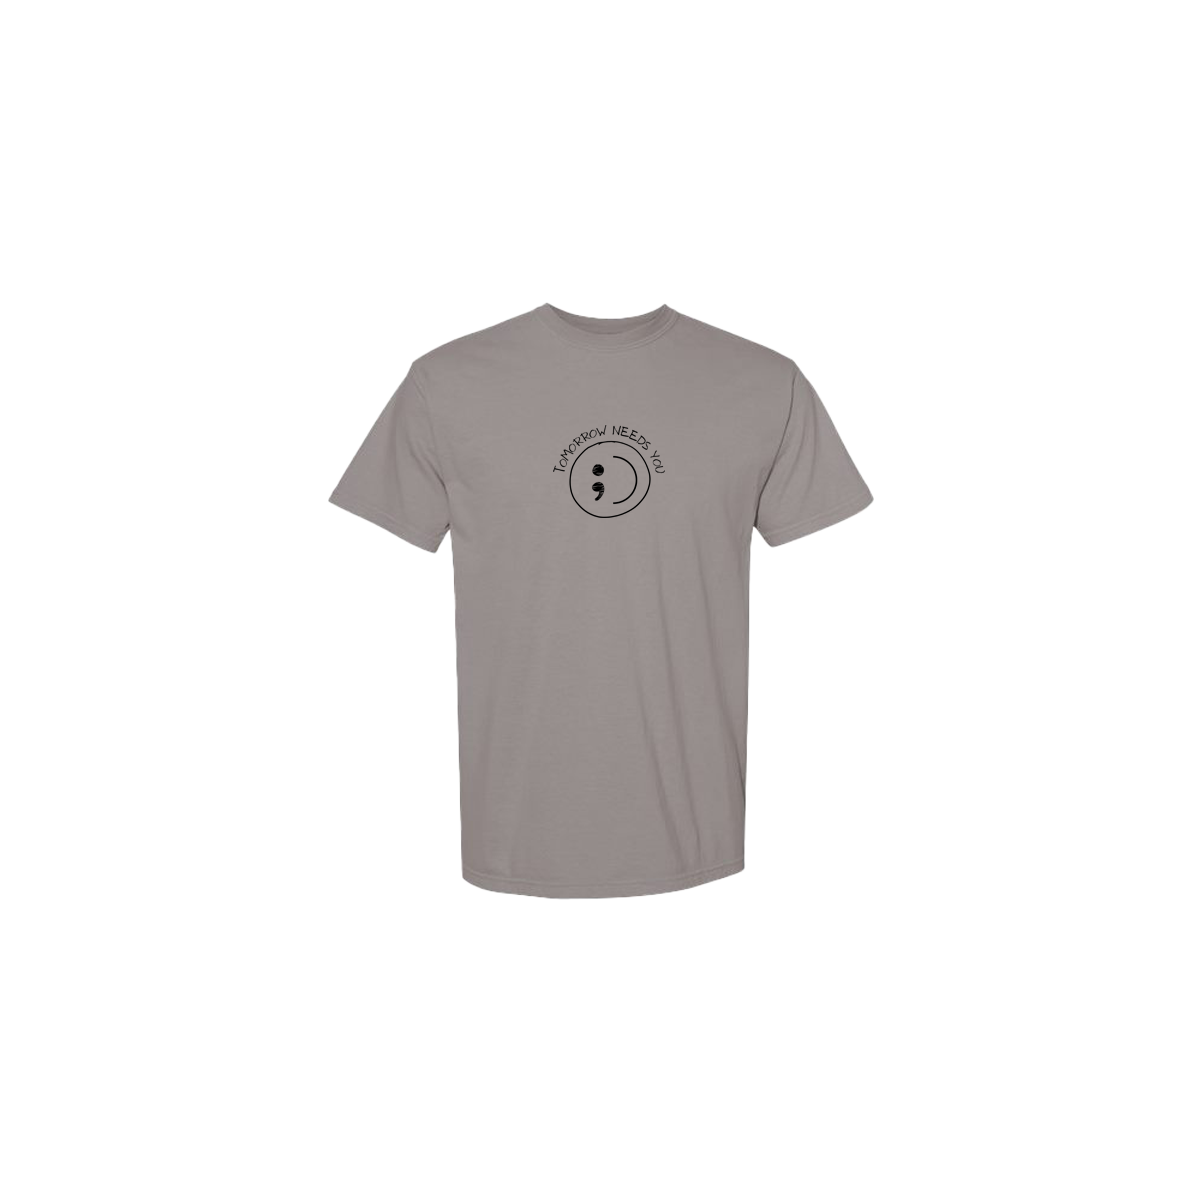 Tomorrow Needs You Embroidered Grey Tshirt - Mental Health Awareness Clothing